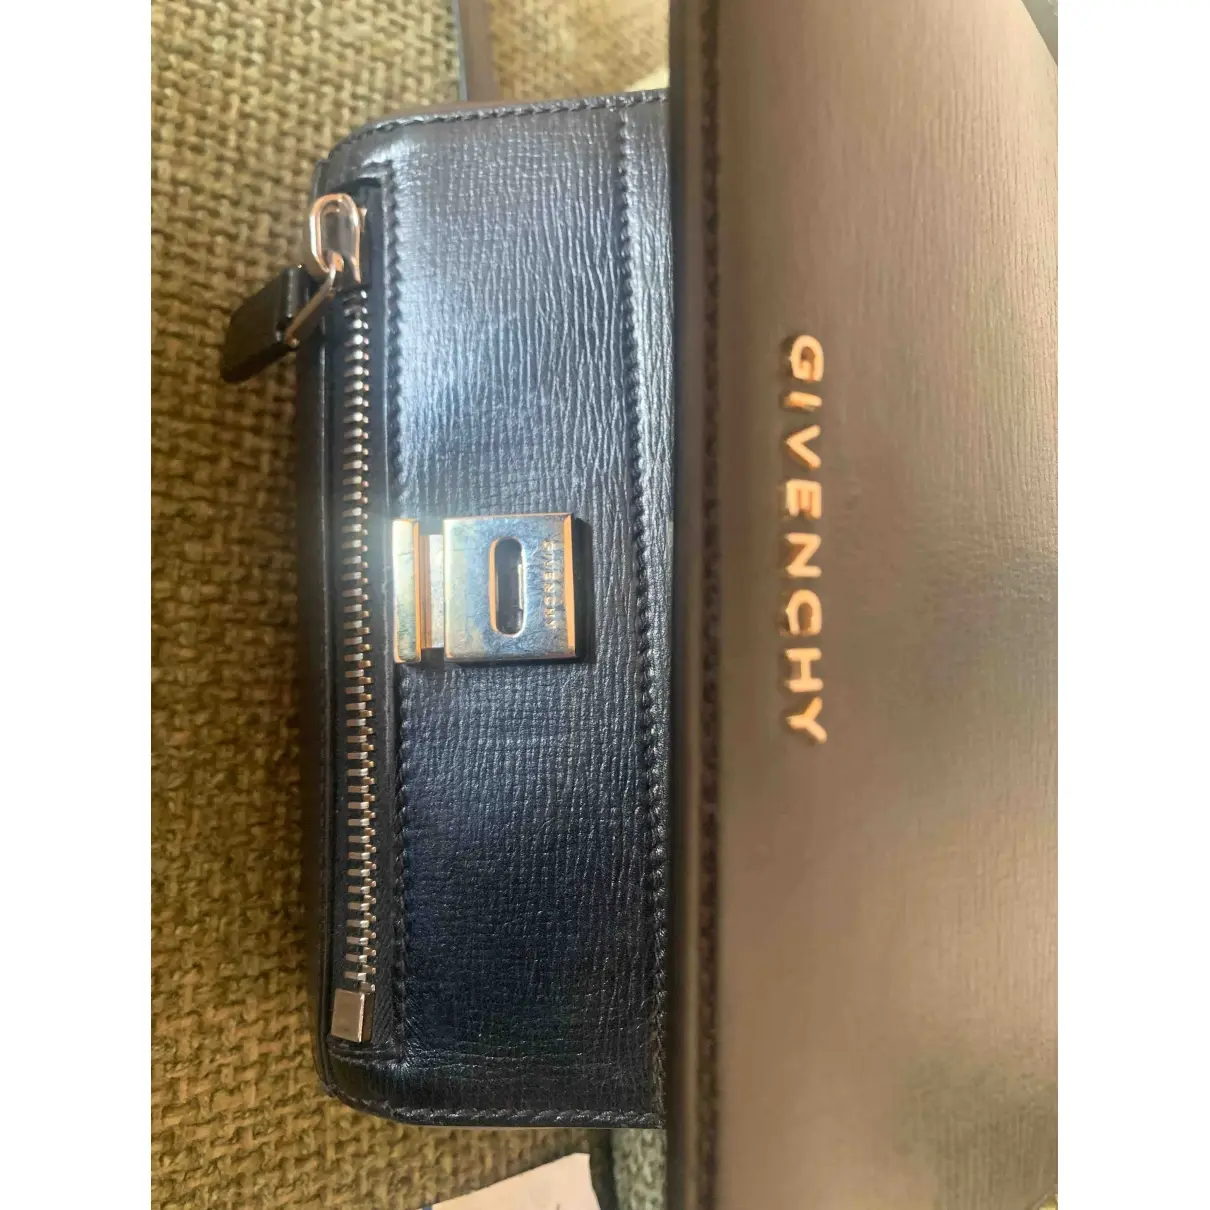 Buy Givenchy Pandora Box leather crossbody bag online